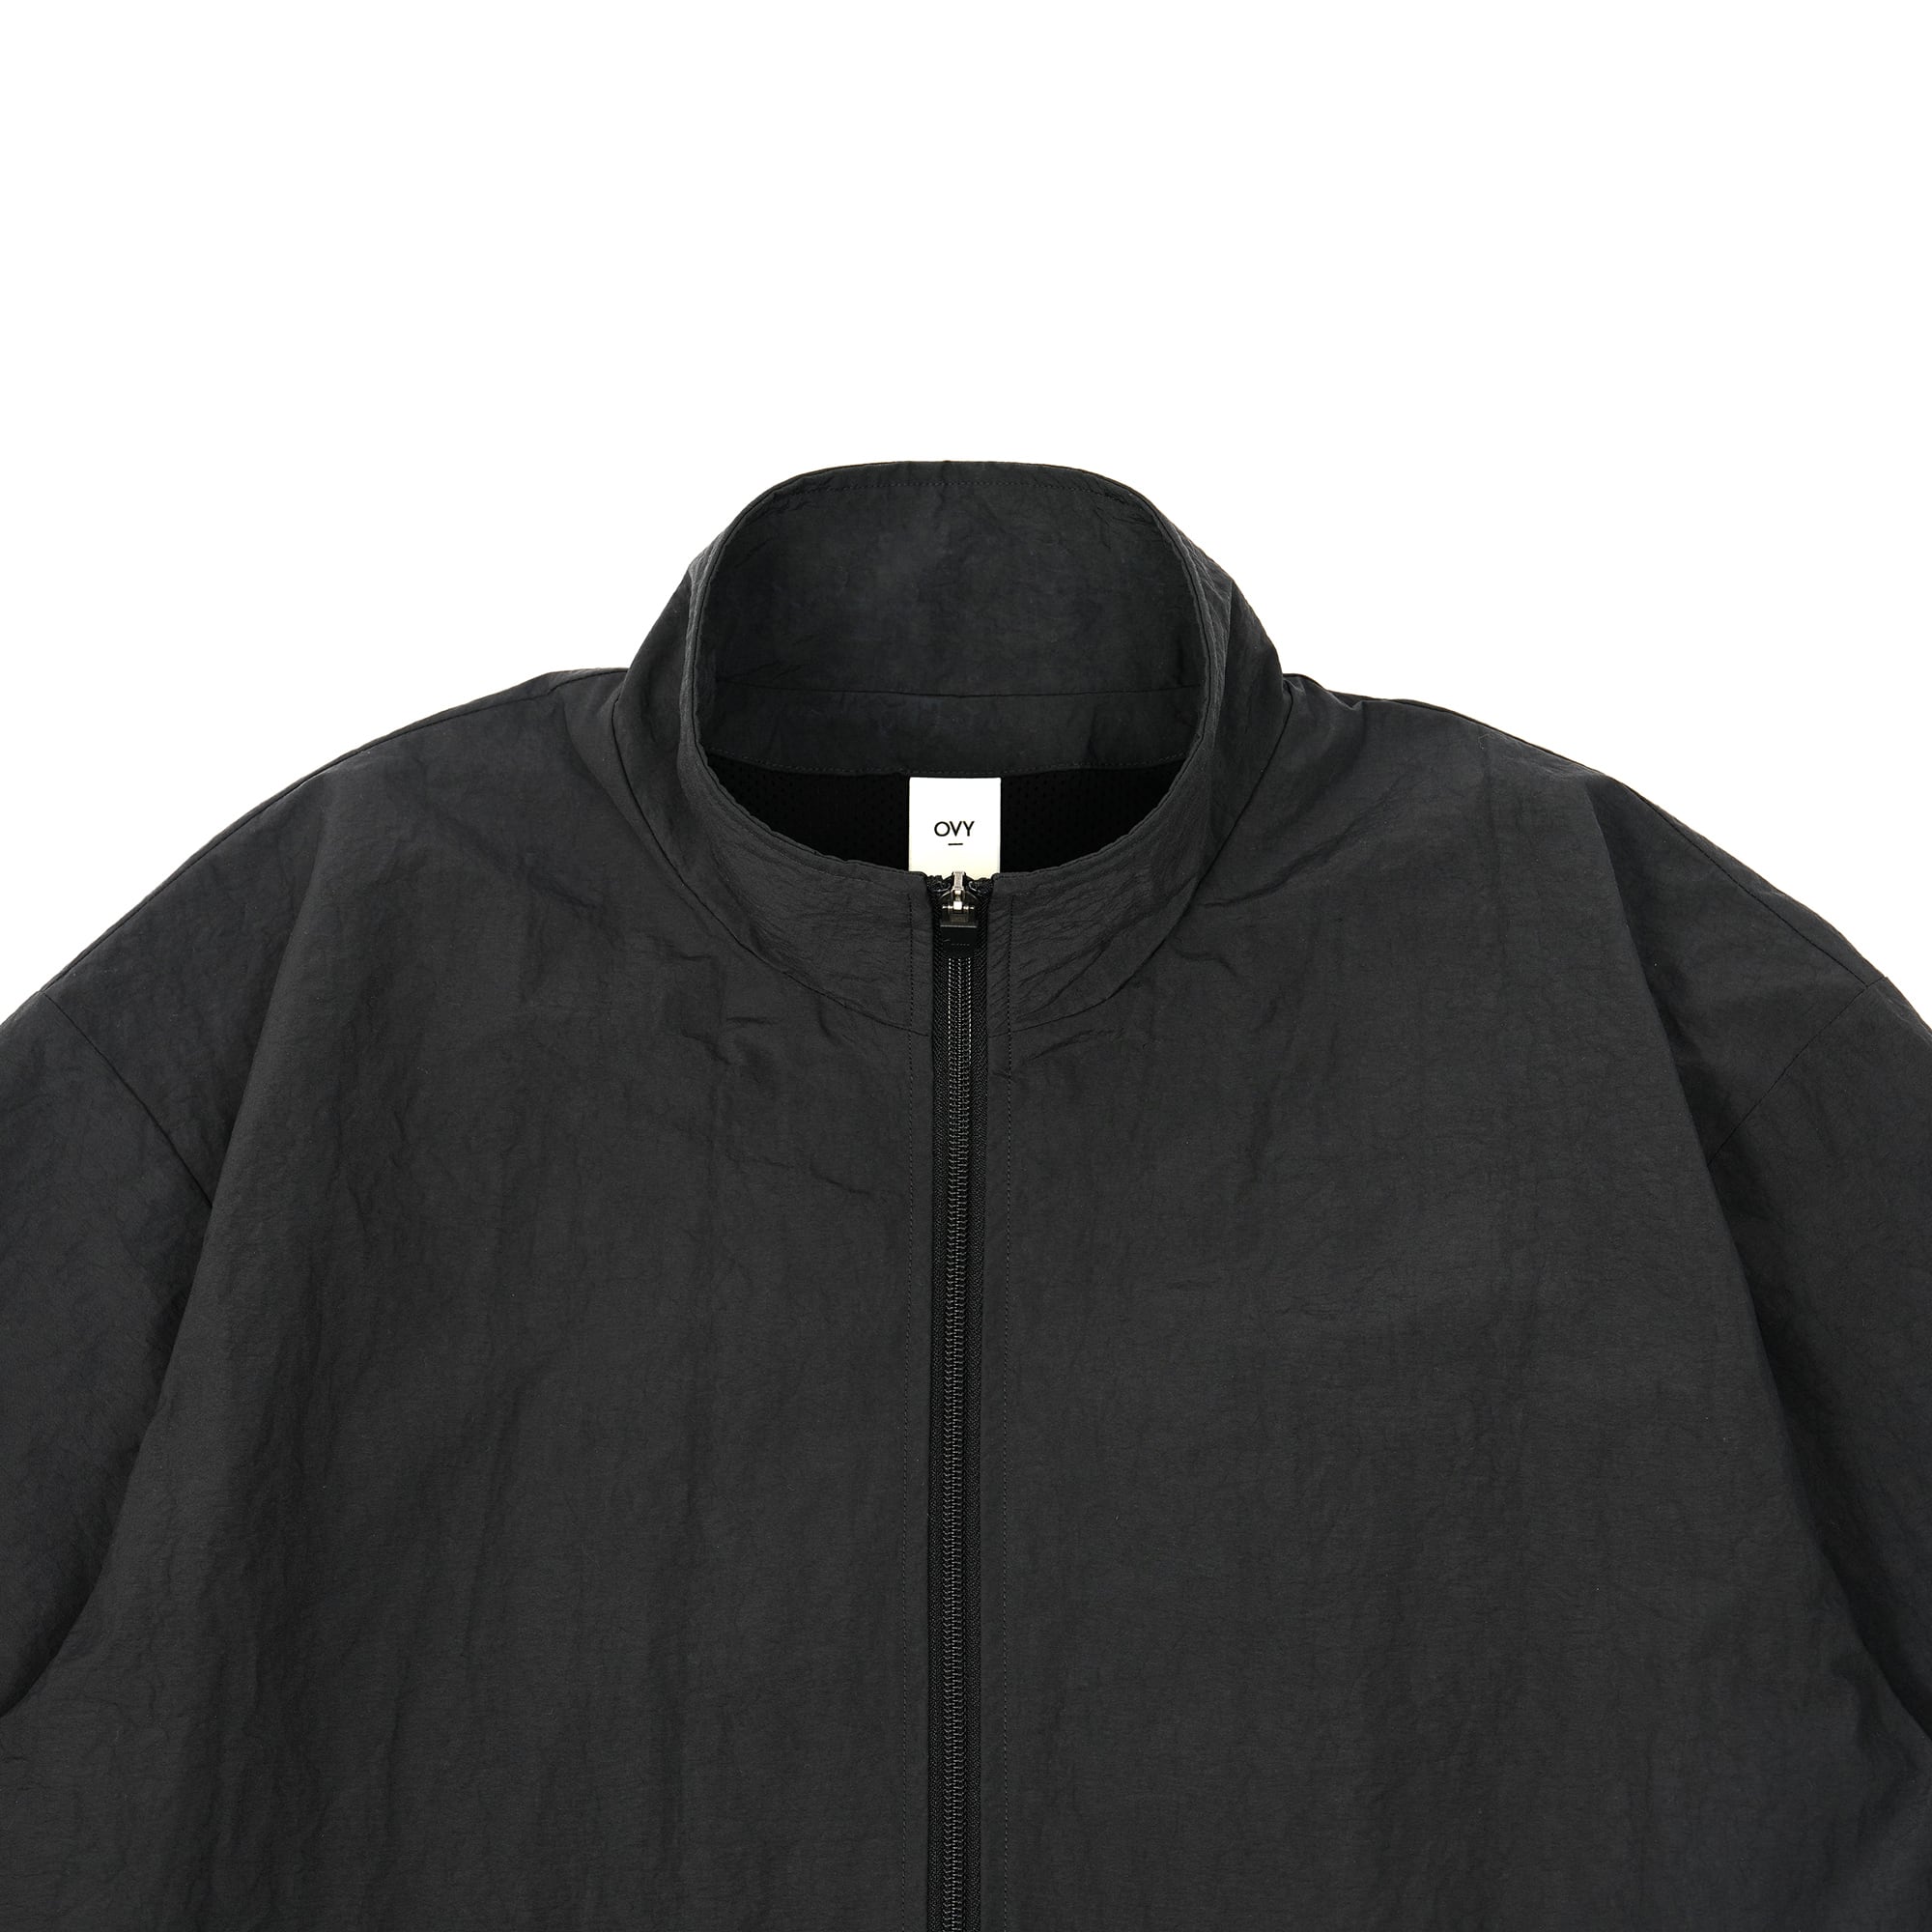 OVY Recycled Nylon Zip-up Jacket